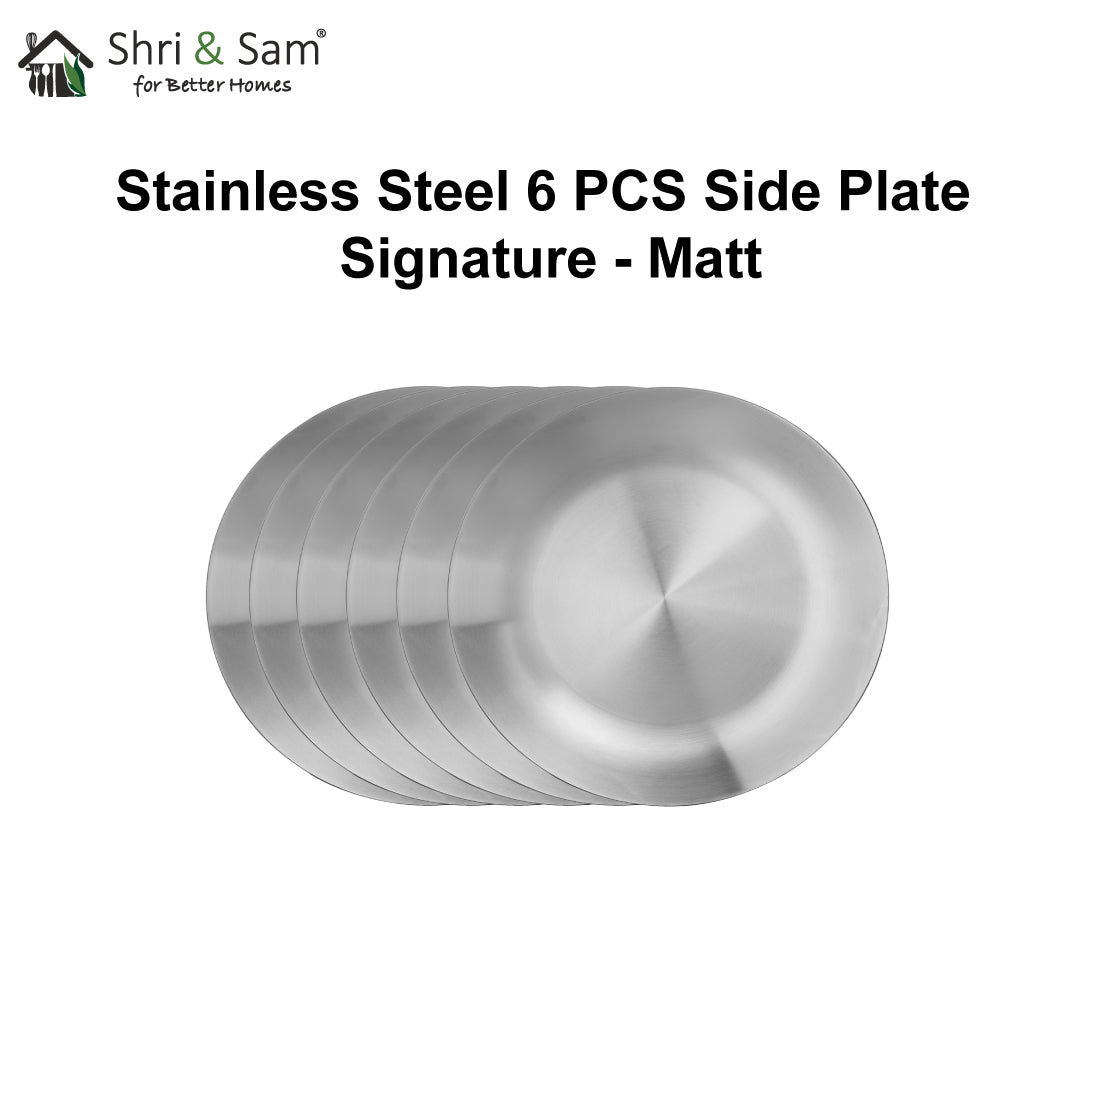 Stainless Steel 6 PCS Side Plate Signature - Matt